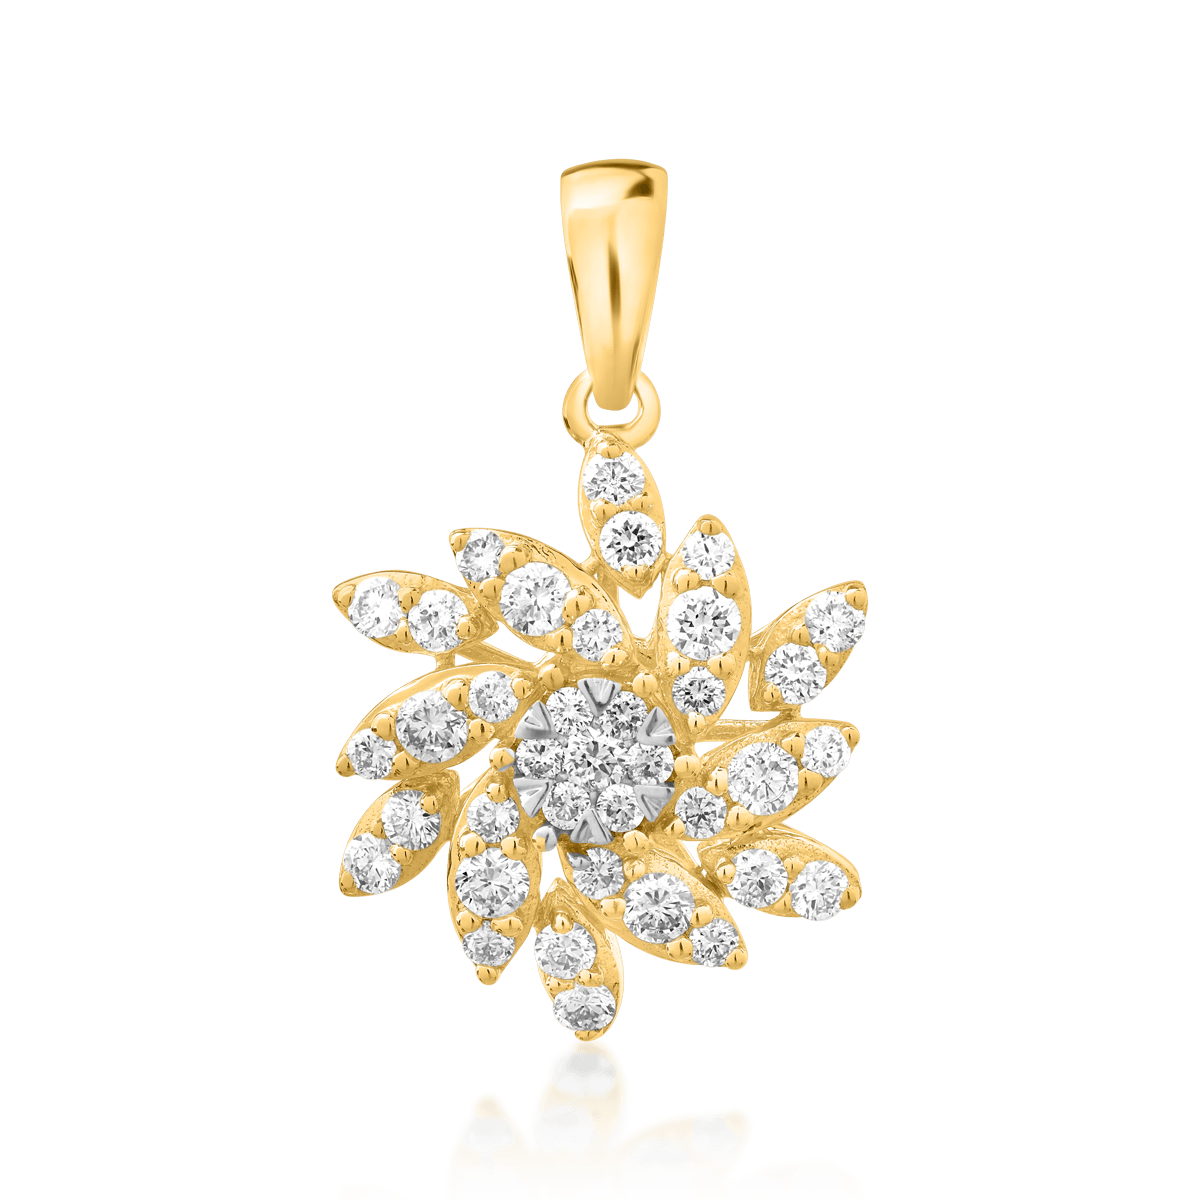 14K yellow gold pendant with diamonds of 0.51ct